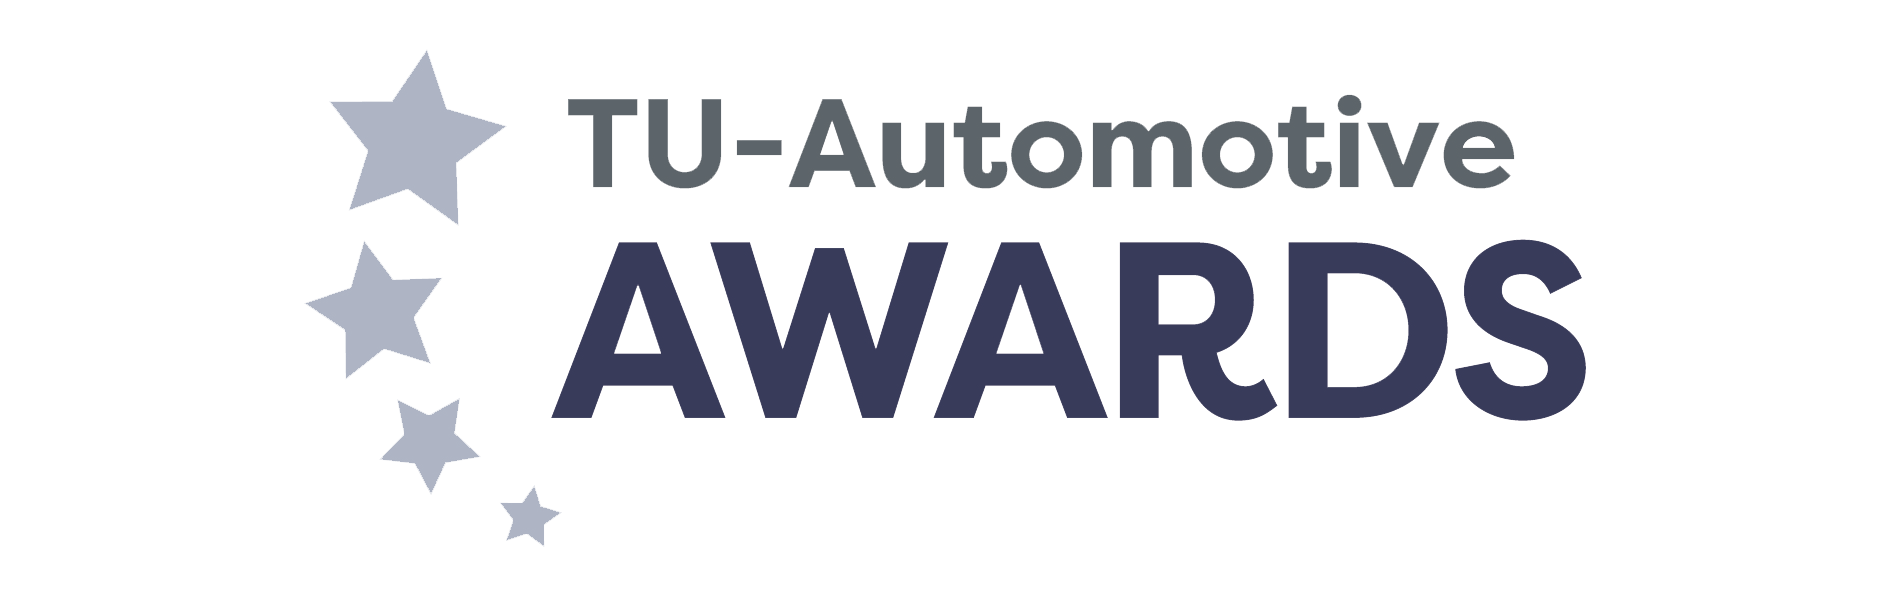 TU-Automotive Awards